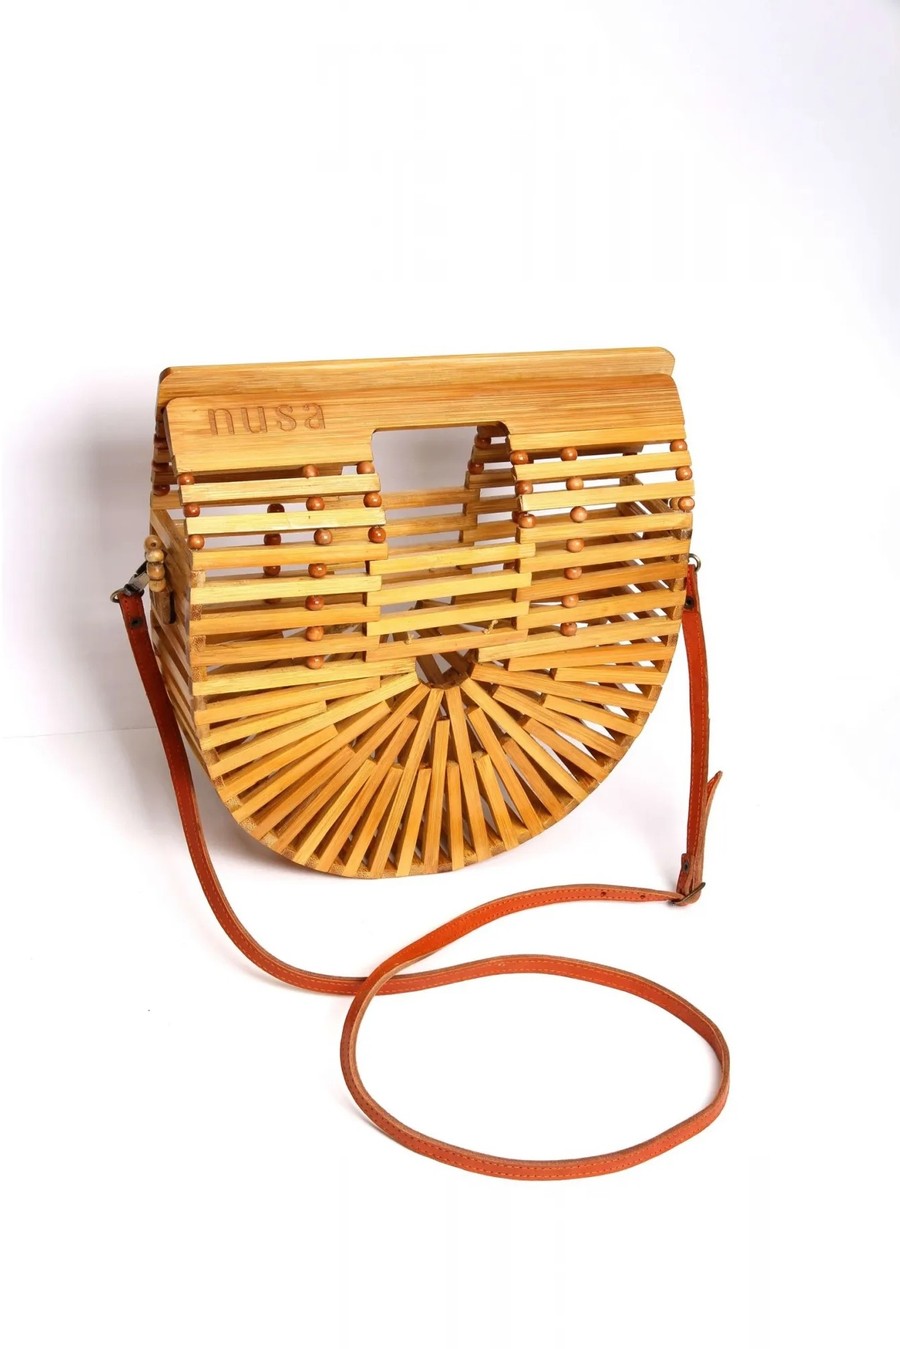 bolsa de bambu balian 2626 nusa